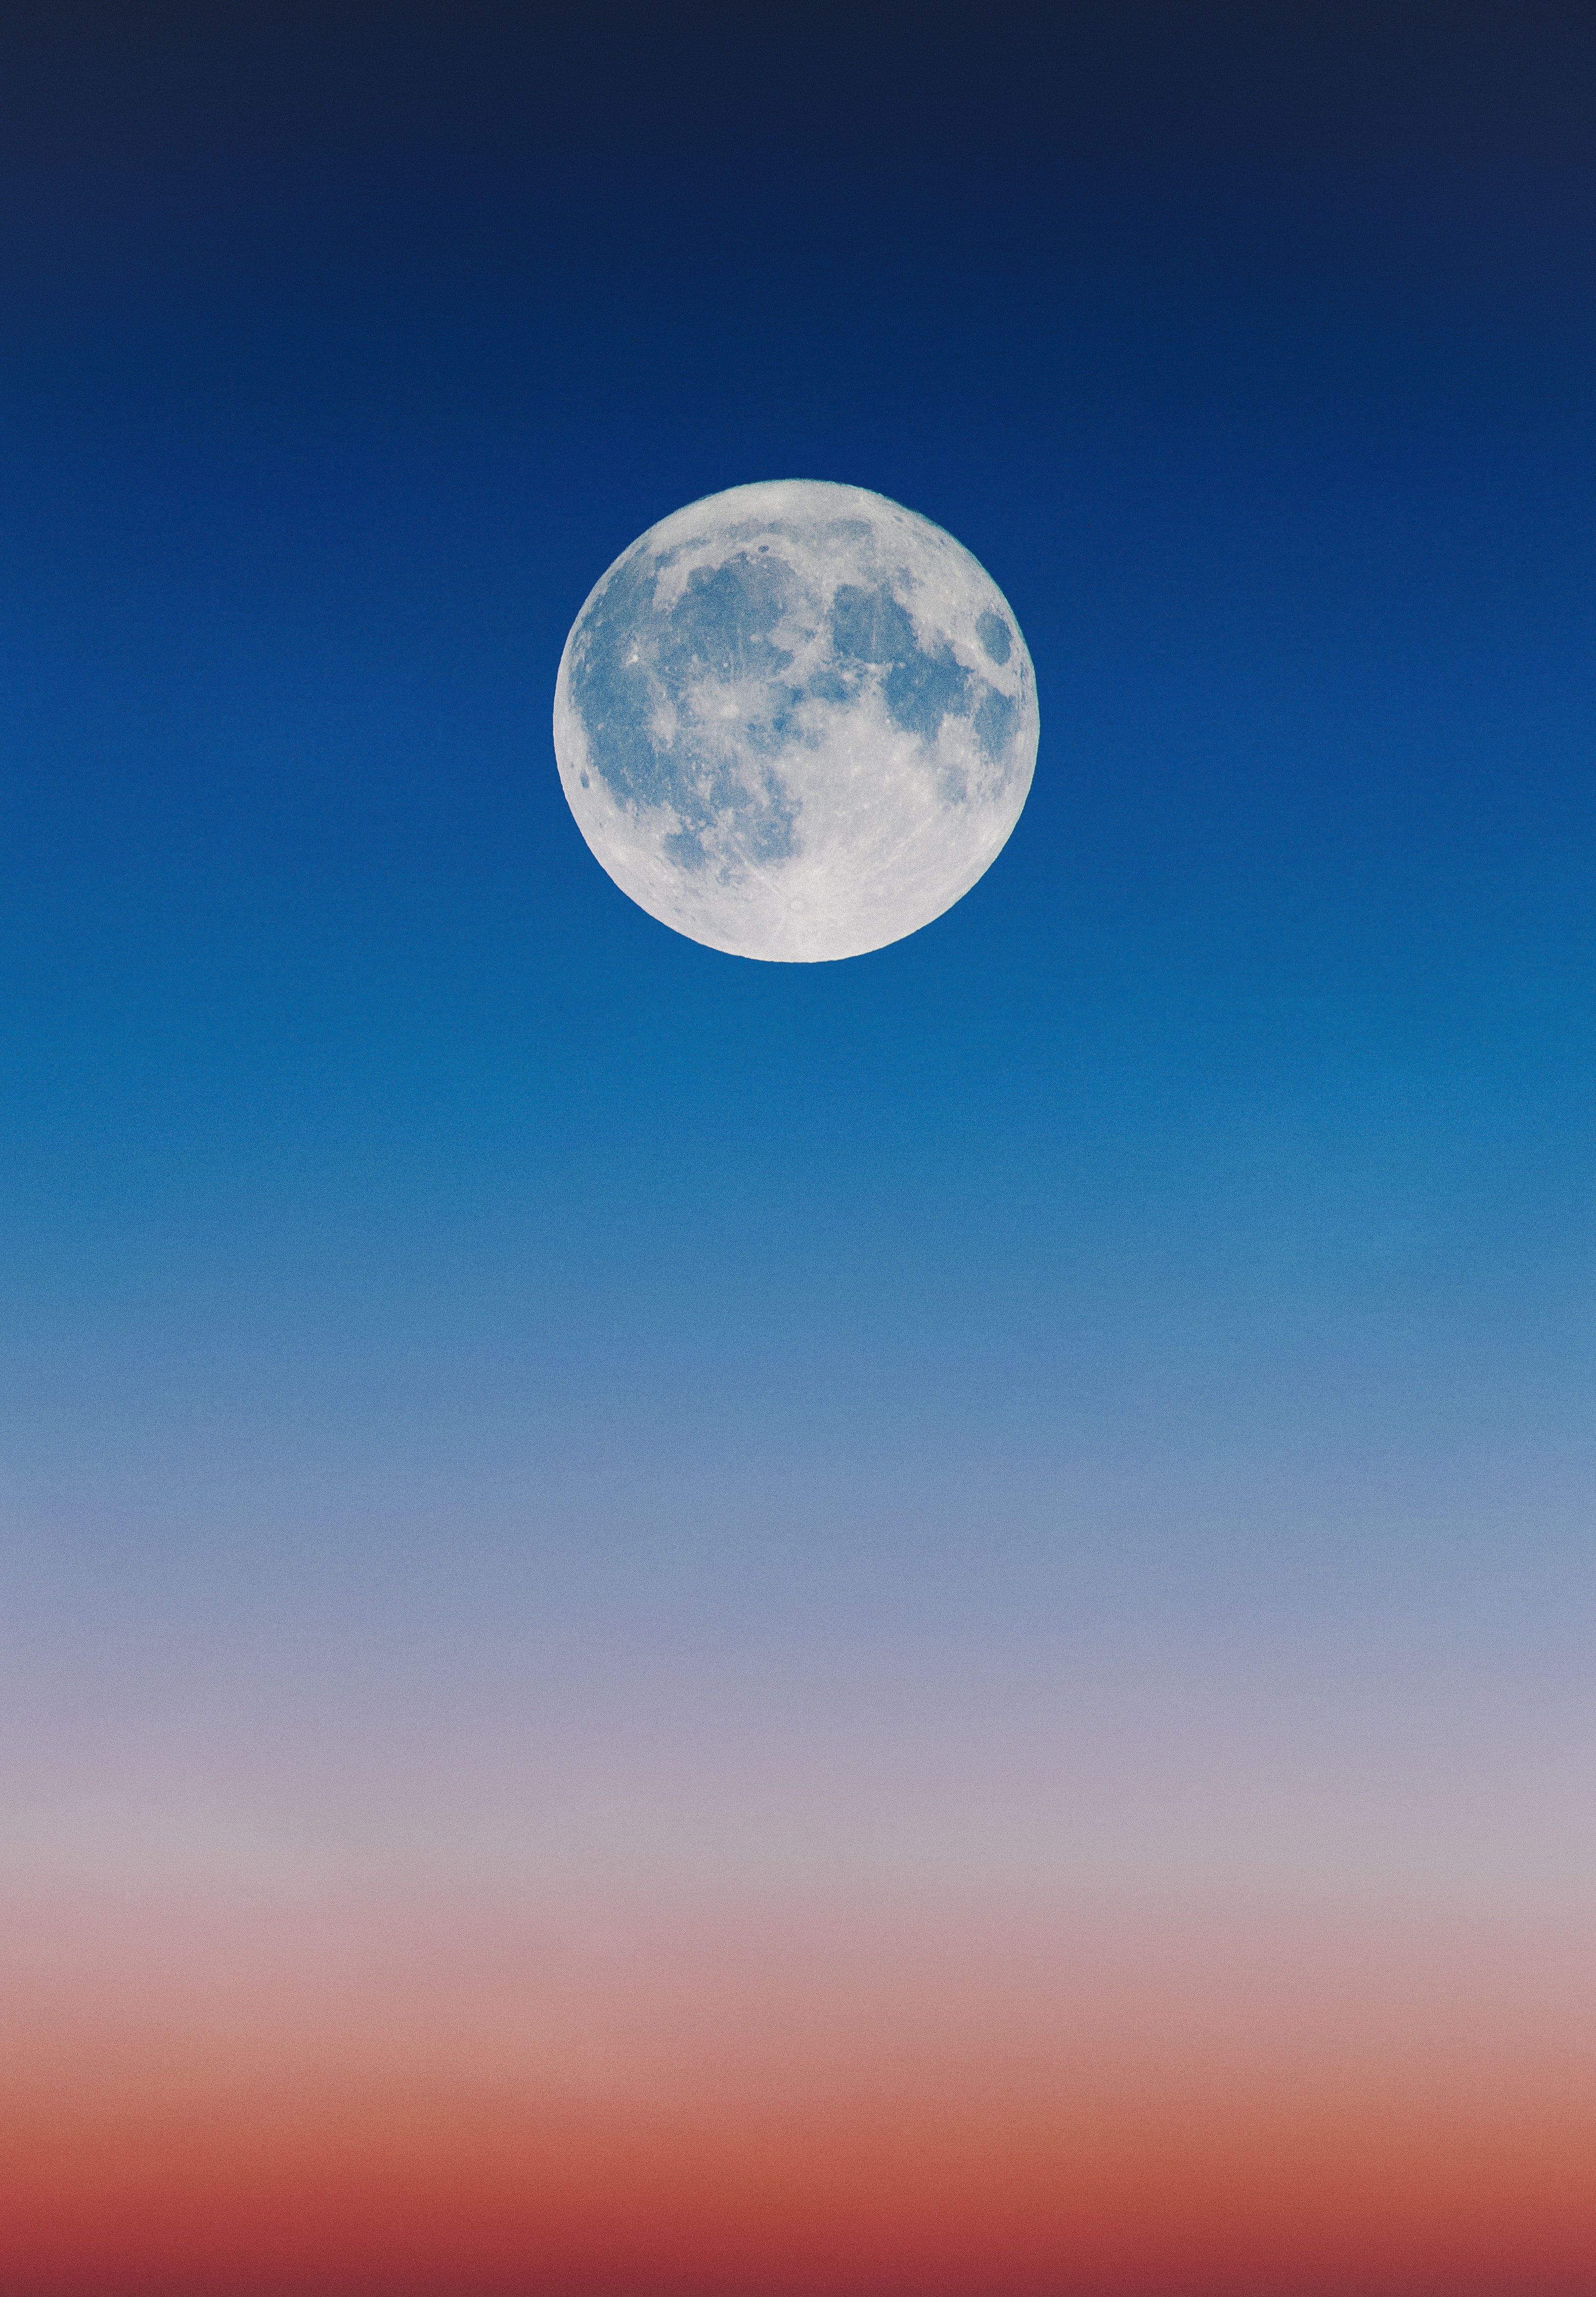 Best Moon Image · 100% Free Downloads